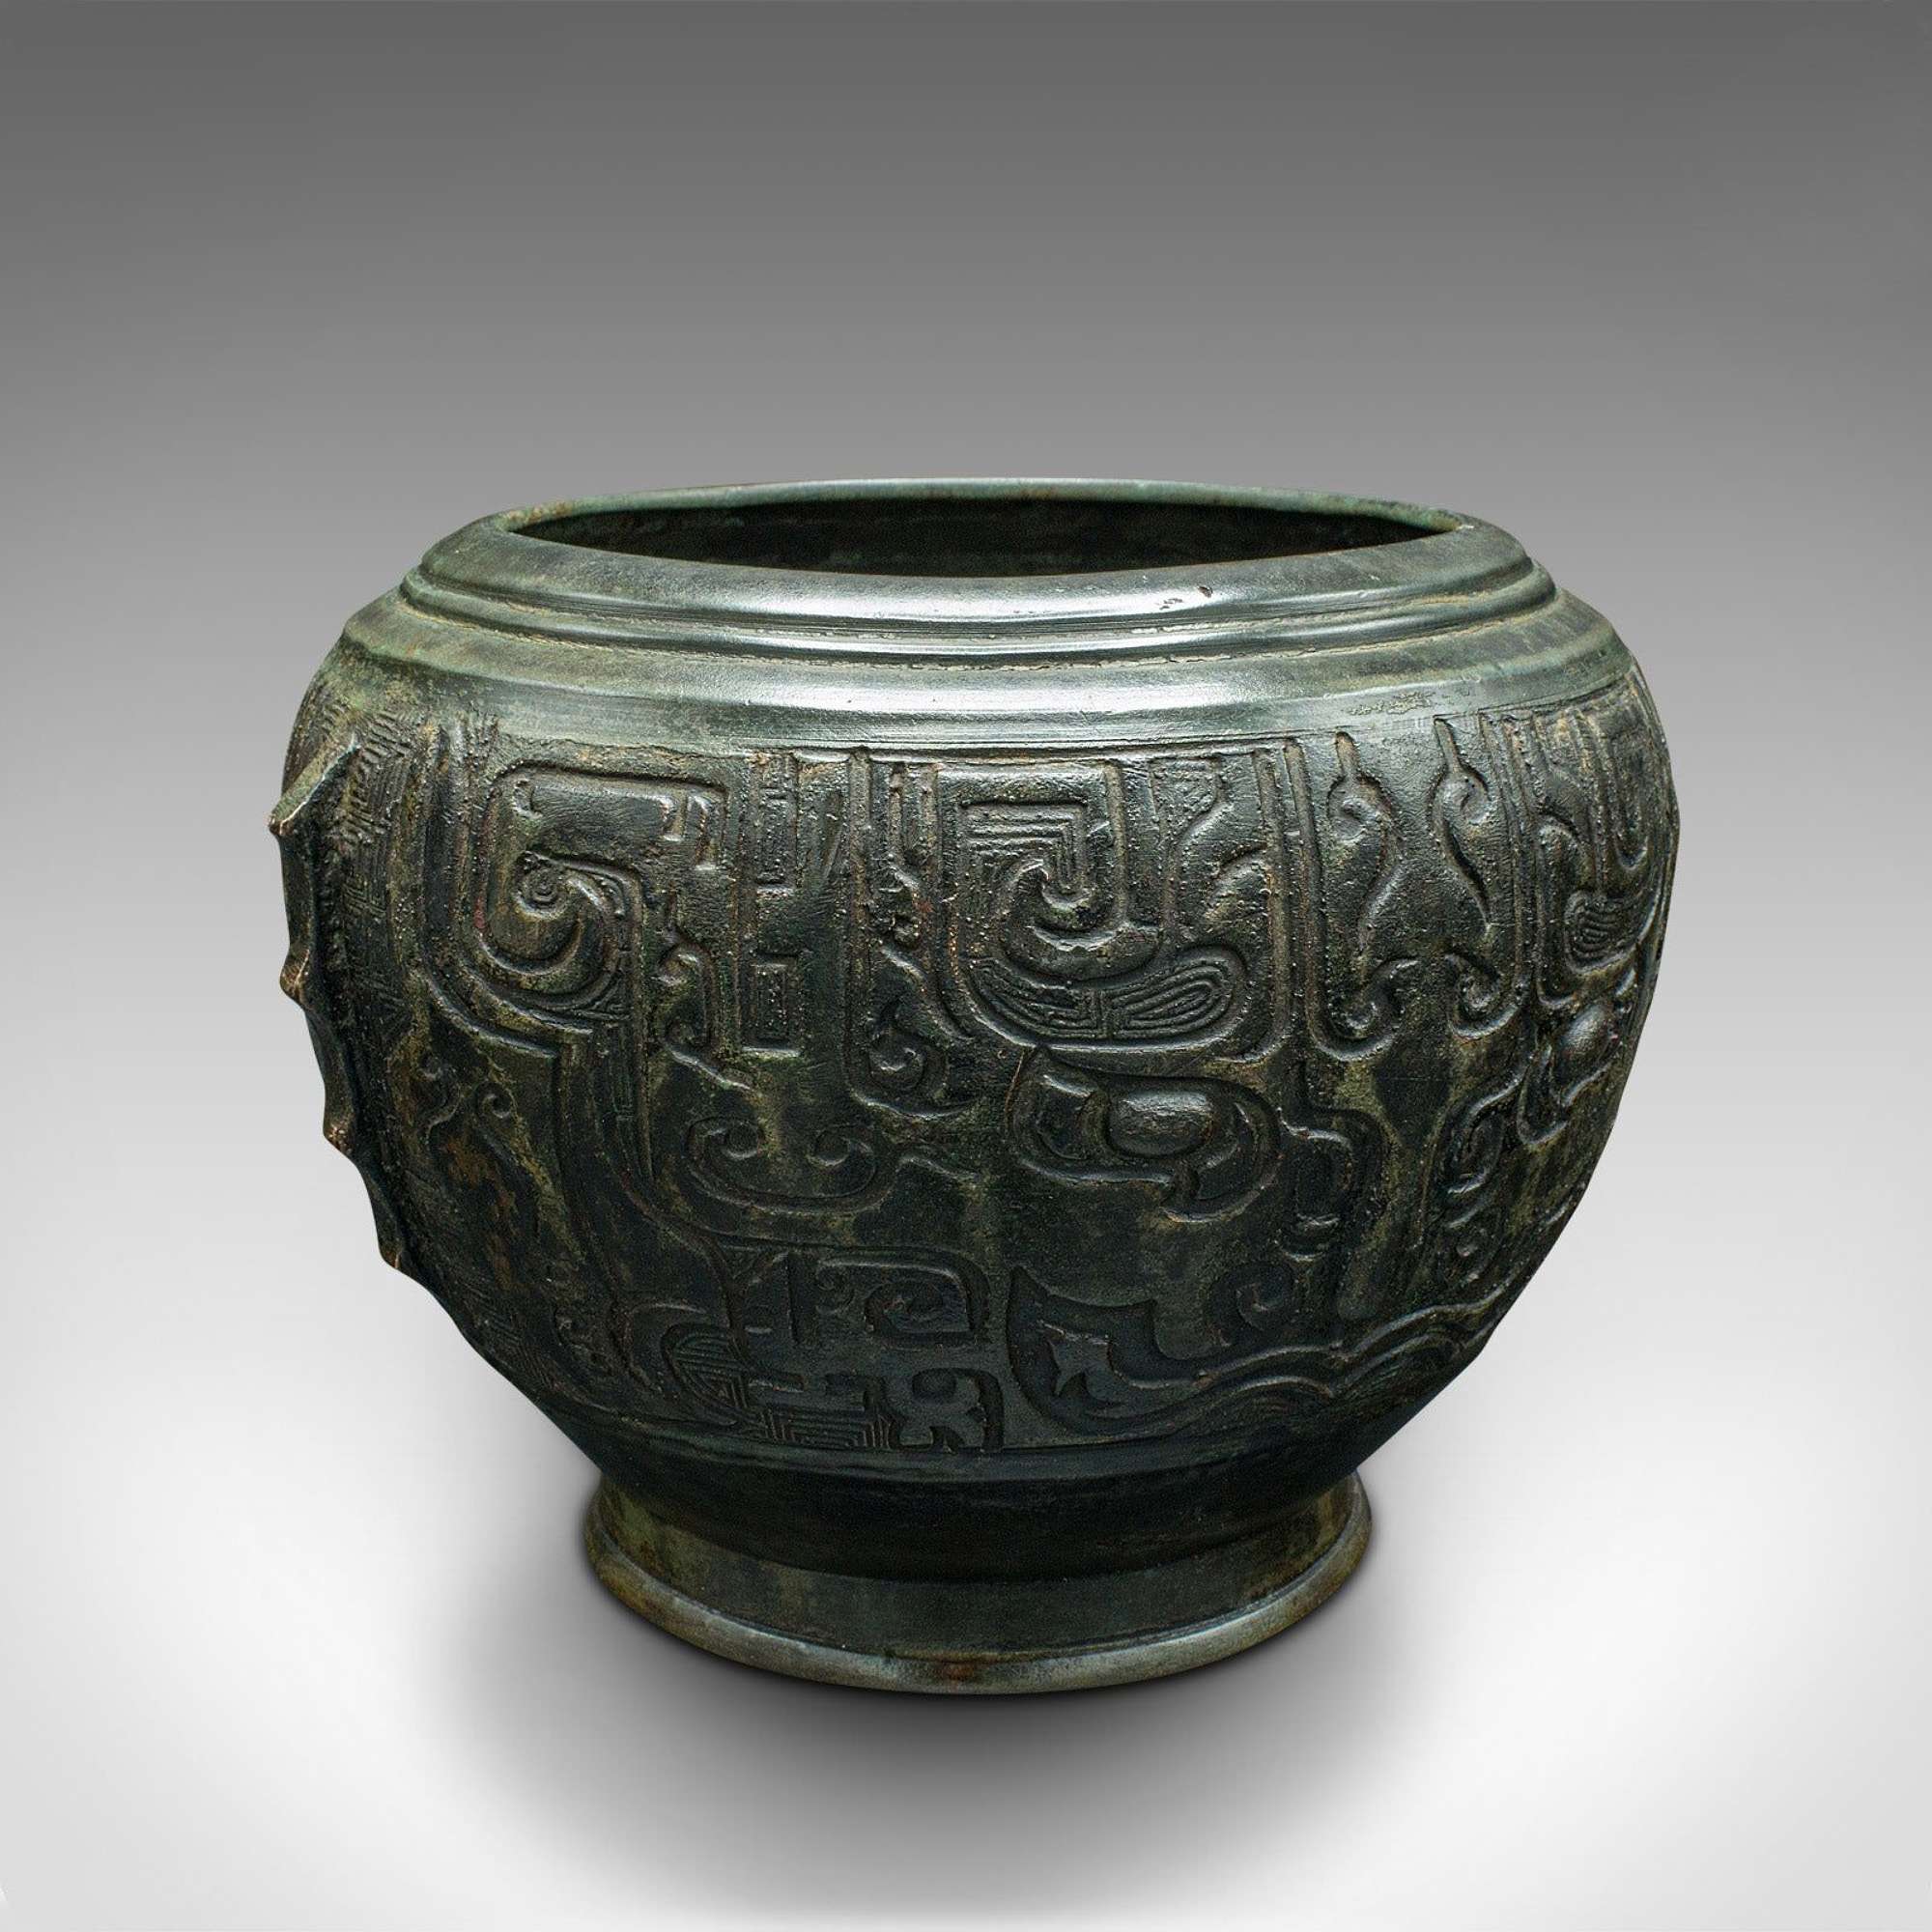 Antique Decorative Censer, Japanese, Bronze, Incense, Jardiniere Pot, Victorian